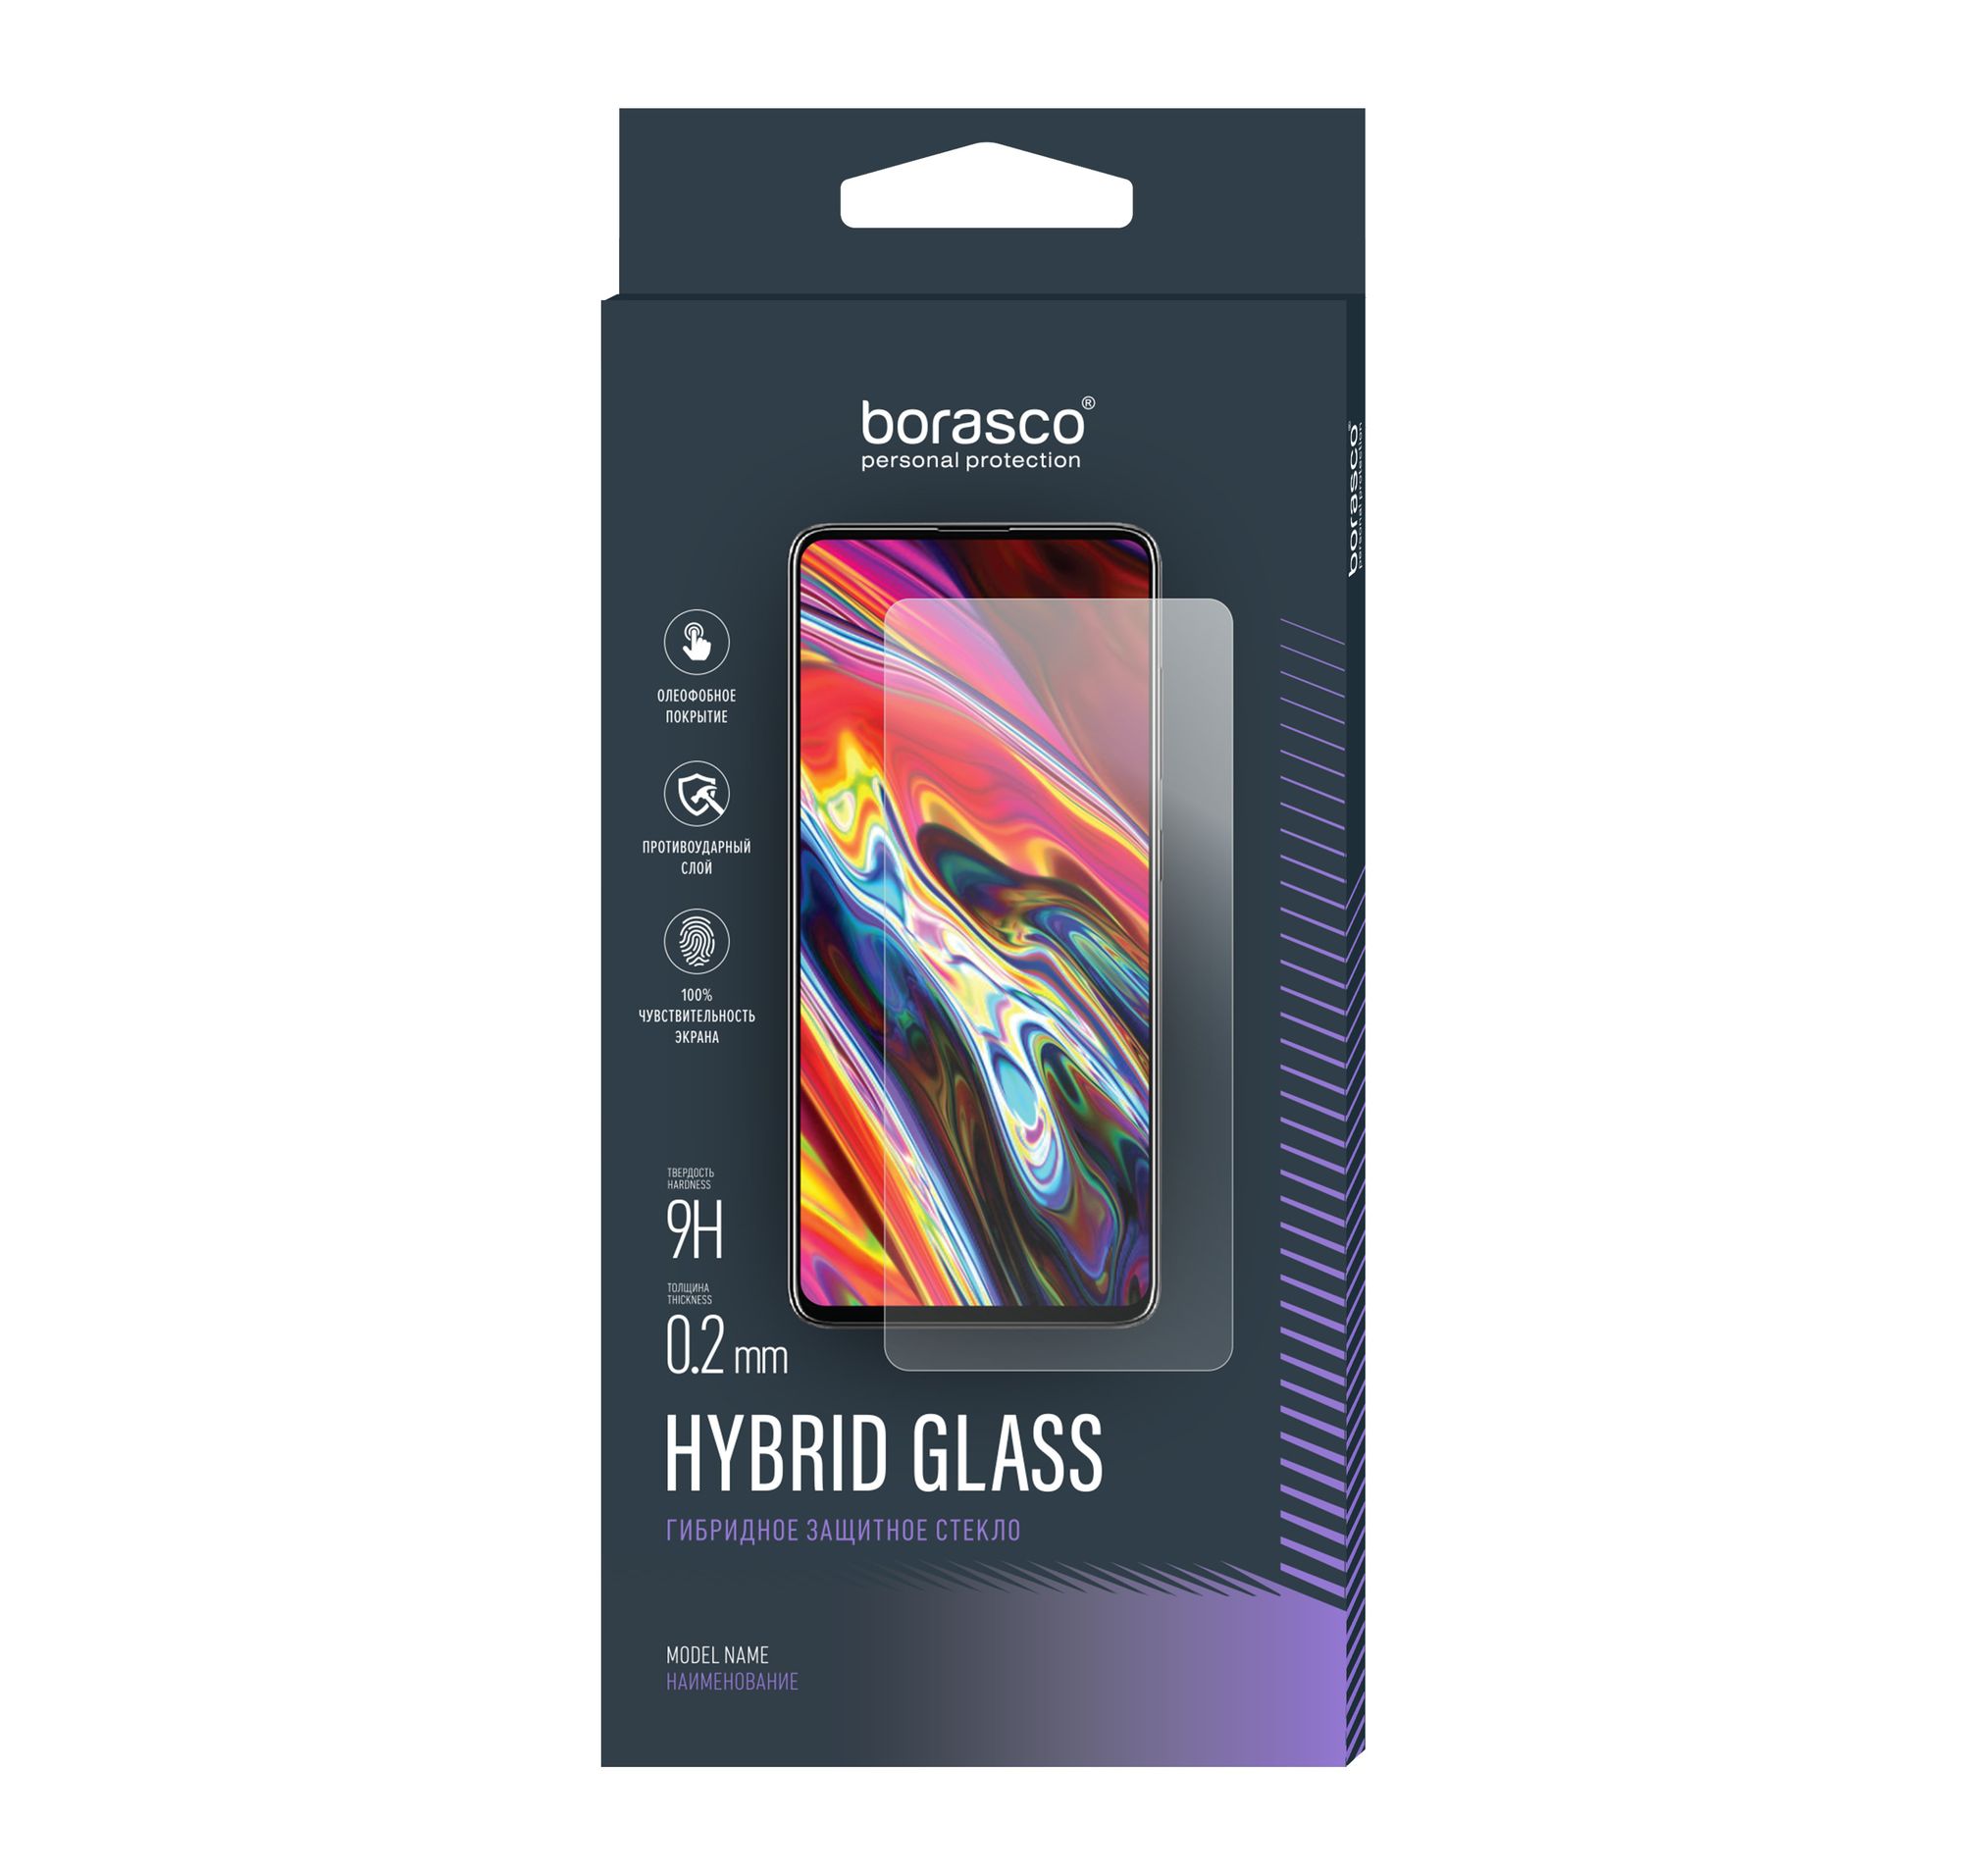 Стекло защитное Hybrid Glass VSP 0,26 мм для Sony Xperia X защитное стекло vsp flex для sony xperia xz1 compact g8441